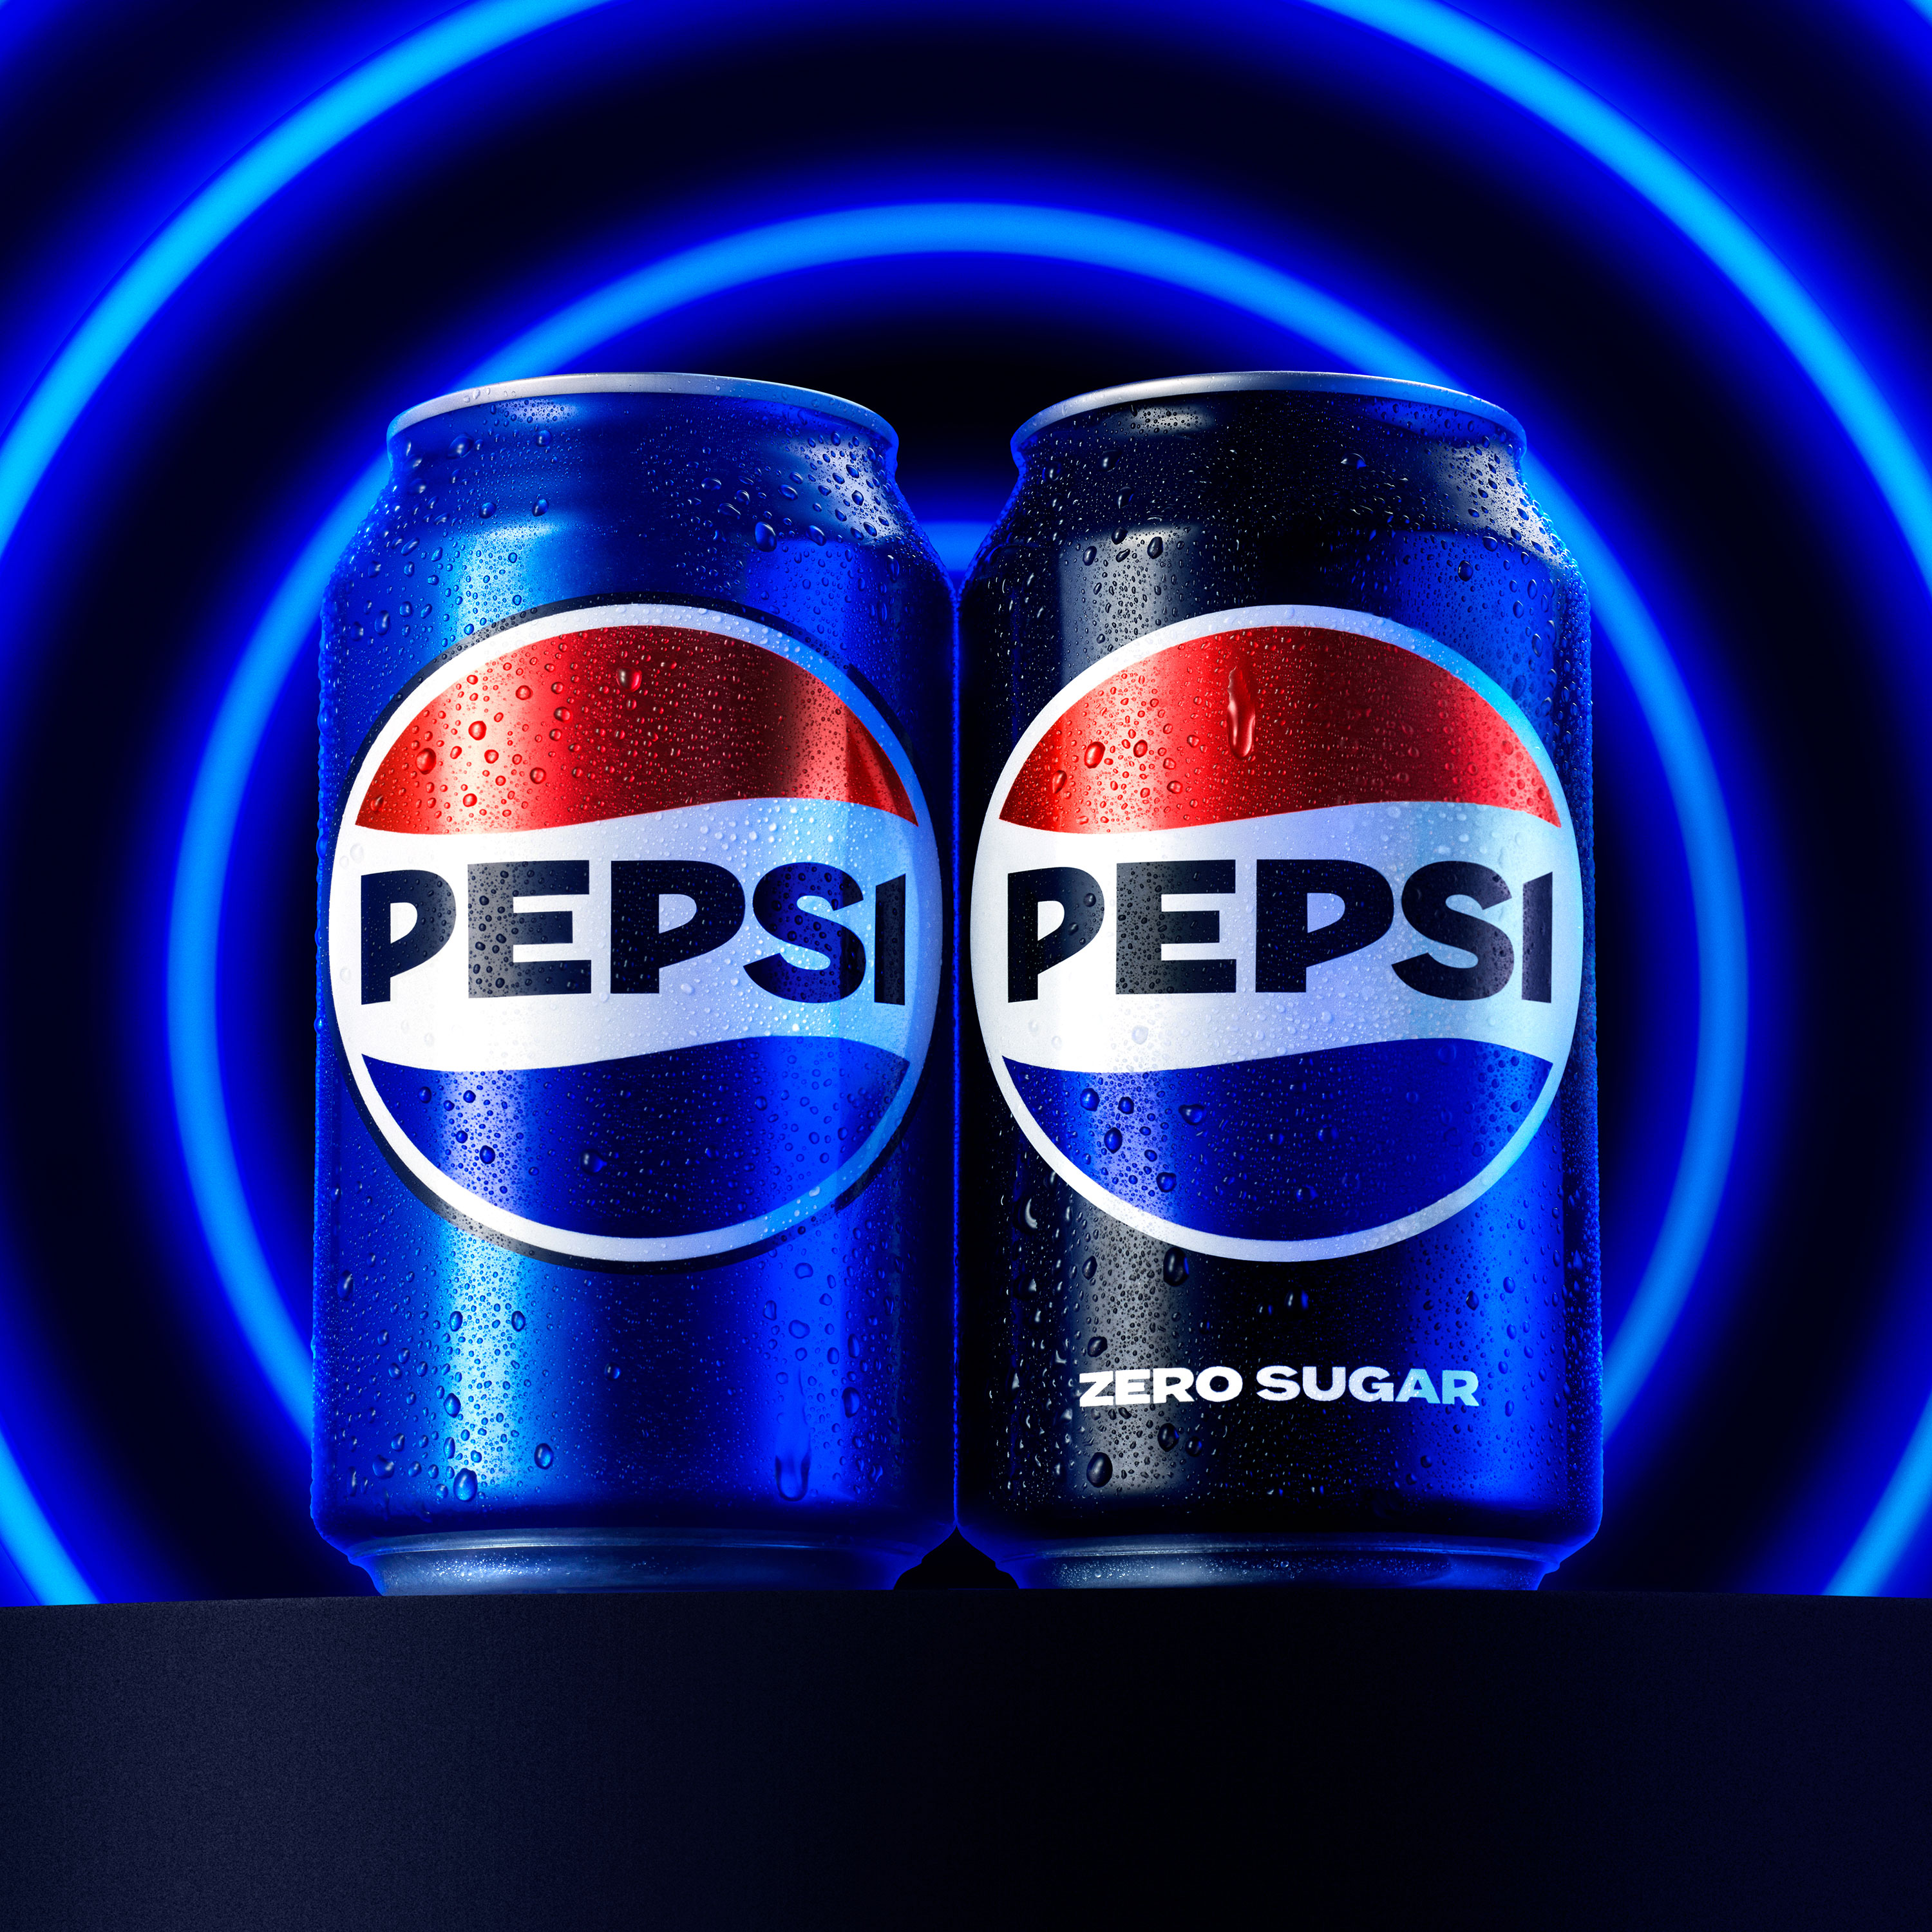 Diet Pepsi Cola Soda Pop, 12 oz, 12 Pack Cans